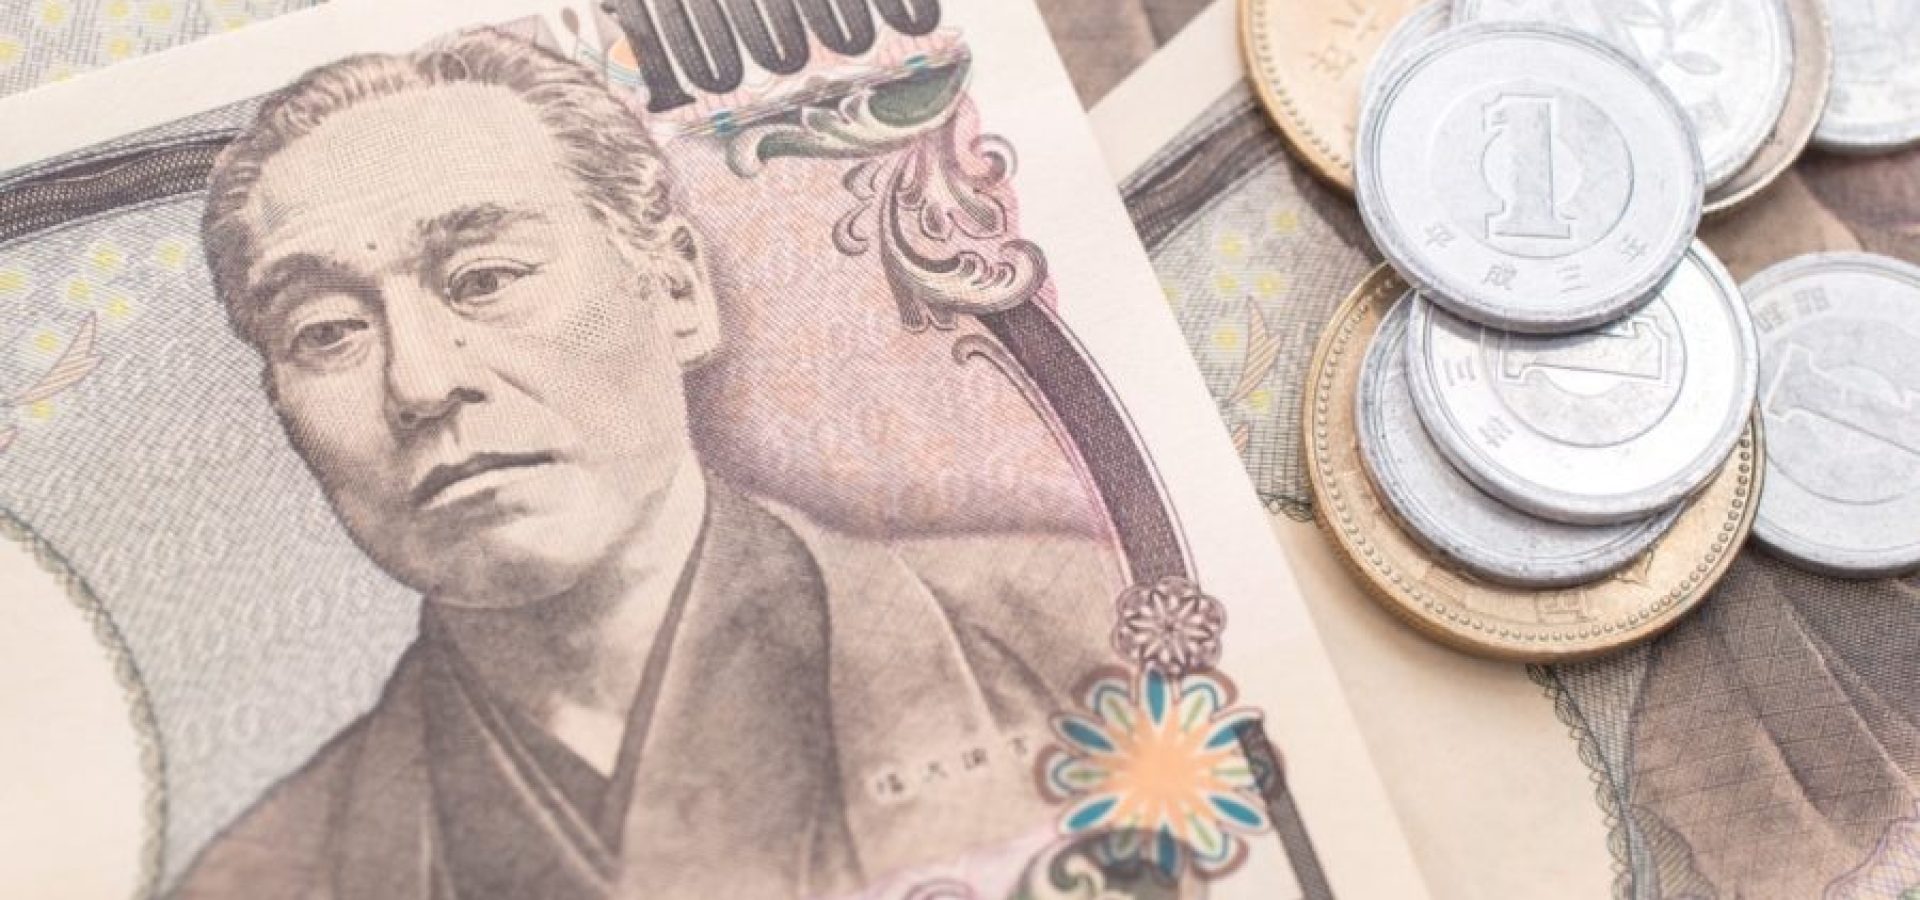 Japanese Yen and U.S. dollar